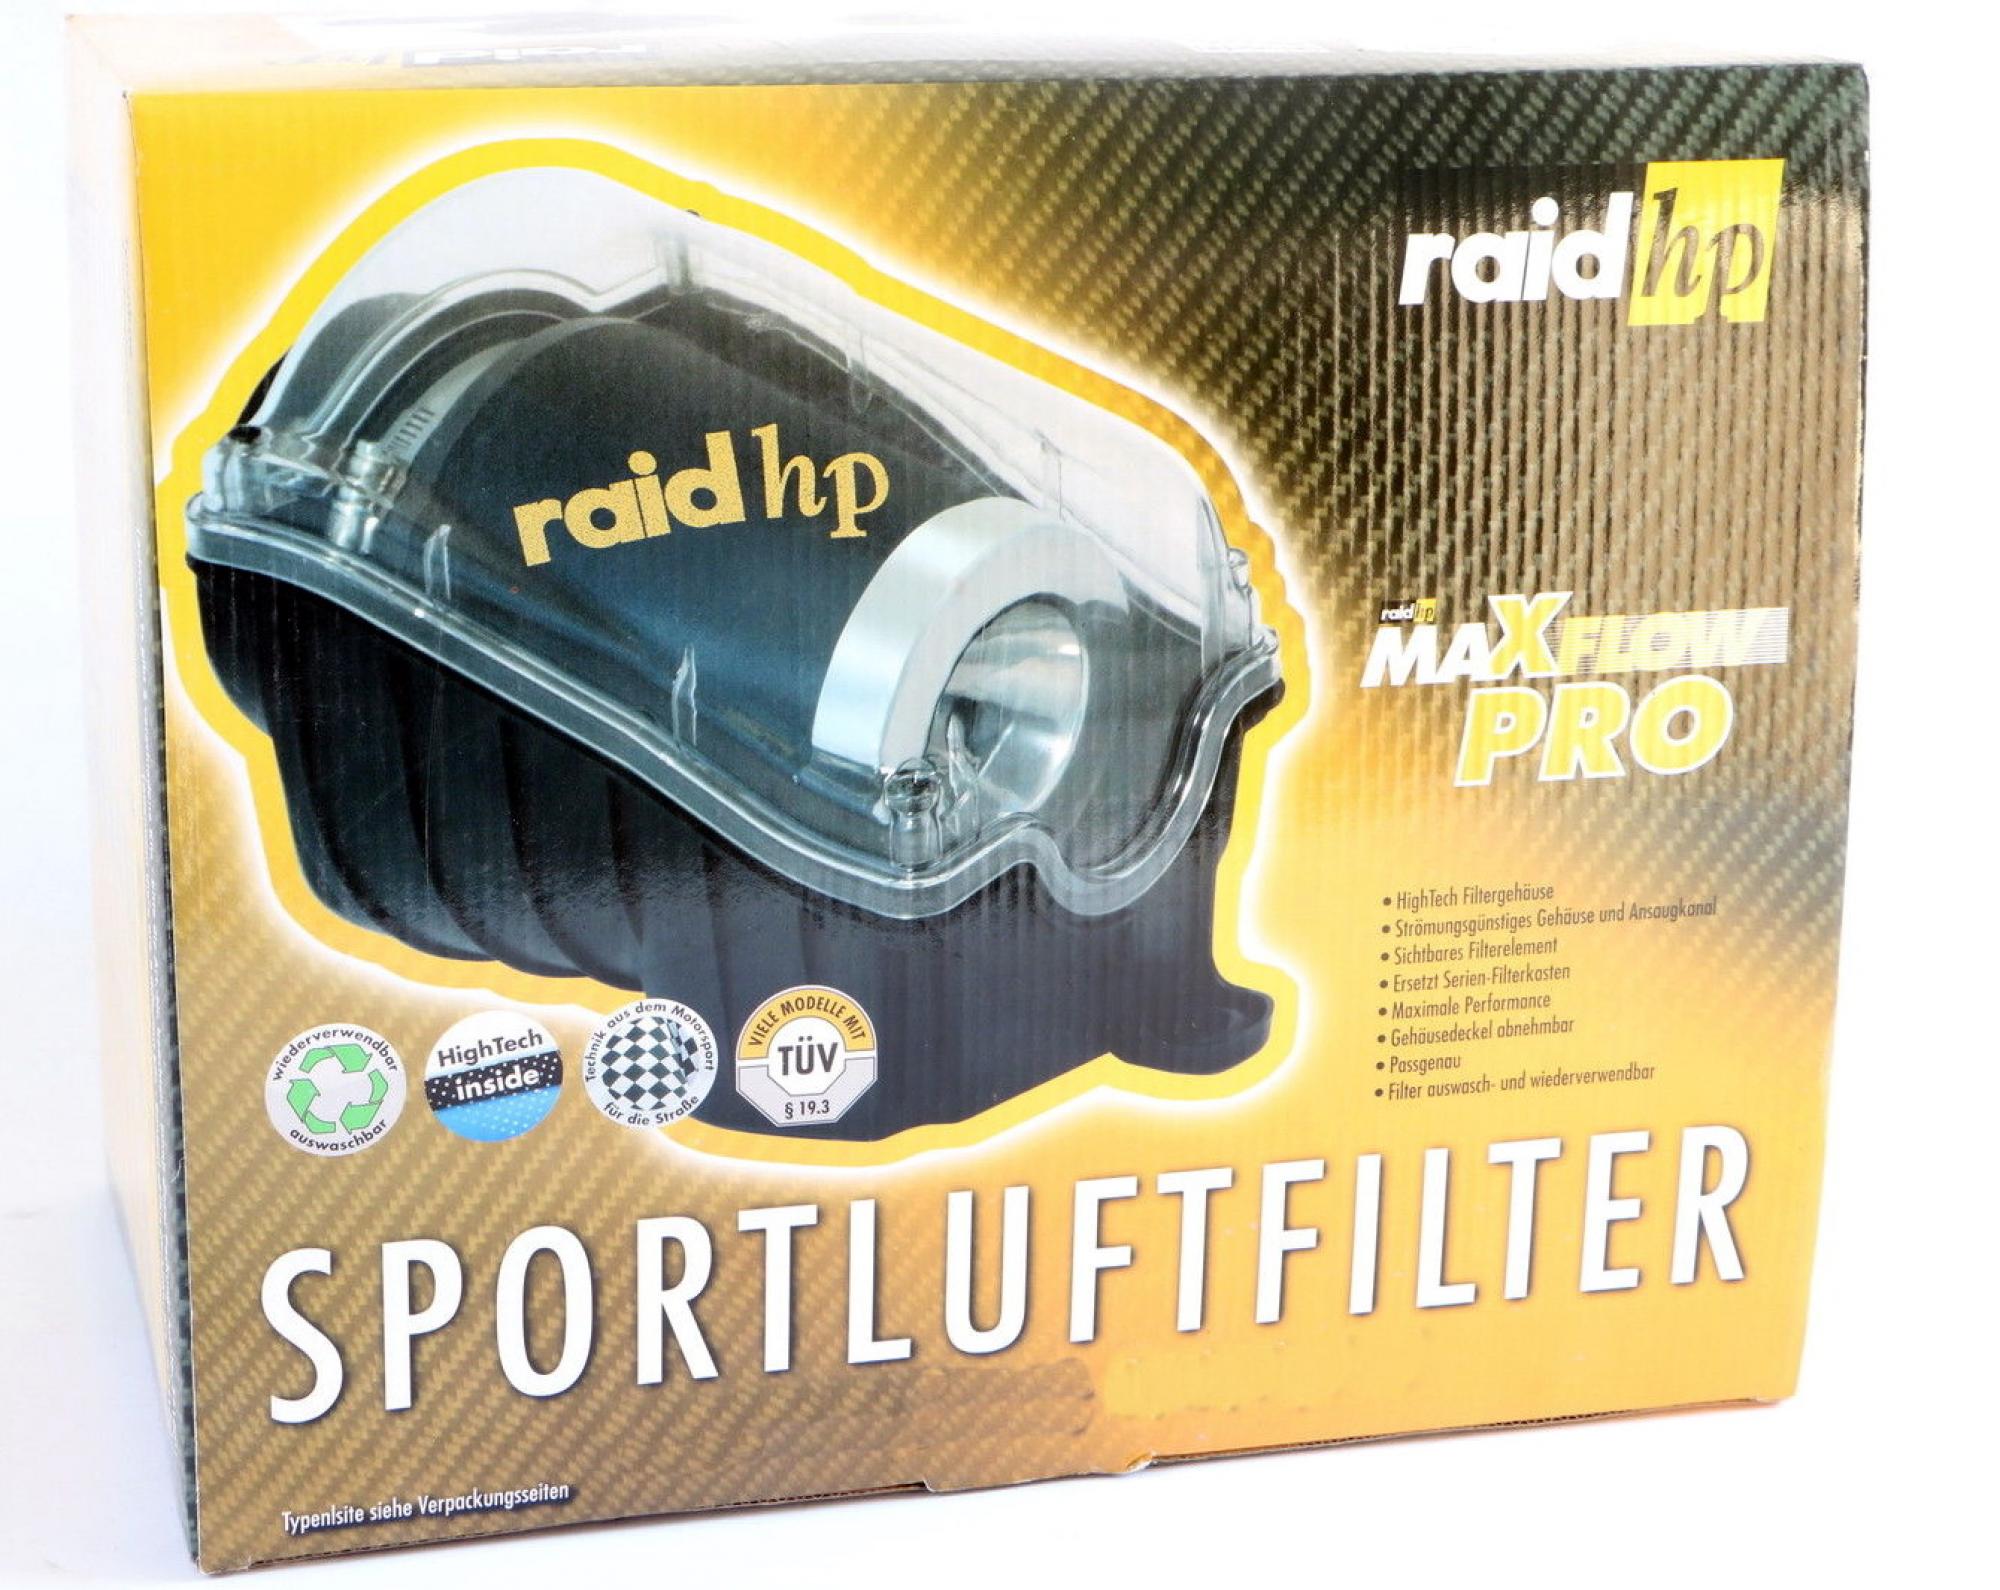 Raid HP Sportluftfilter-System MaxFlow Pro für Seat Leon 1P 2,0 TFSI 521354